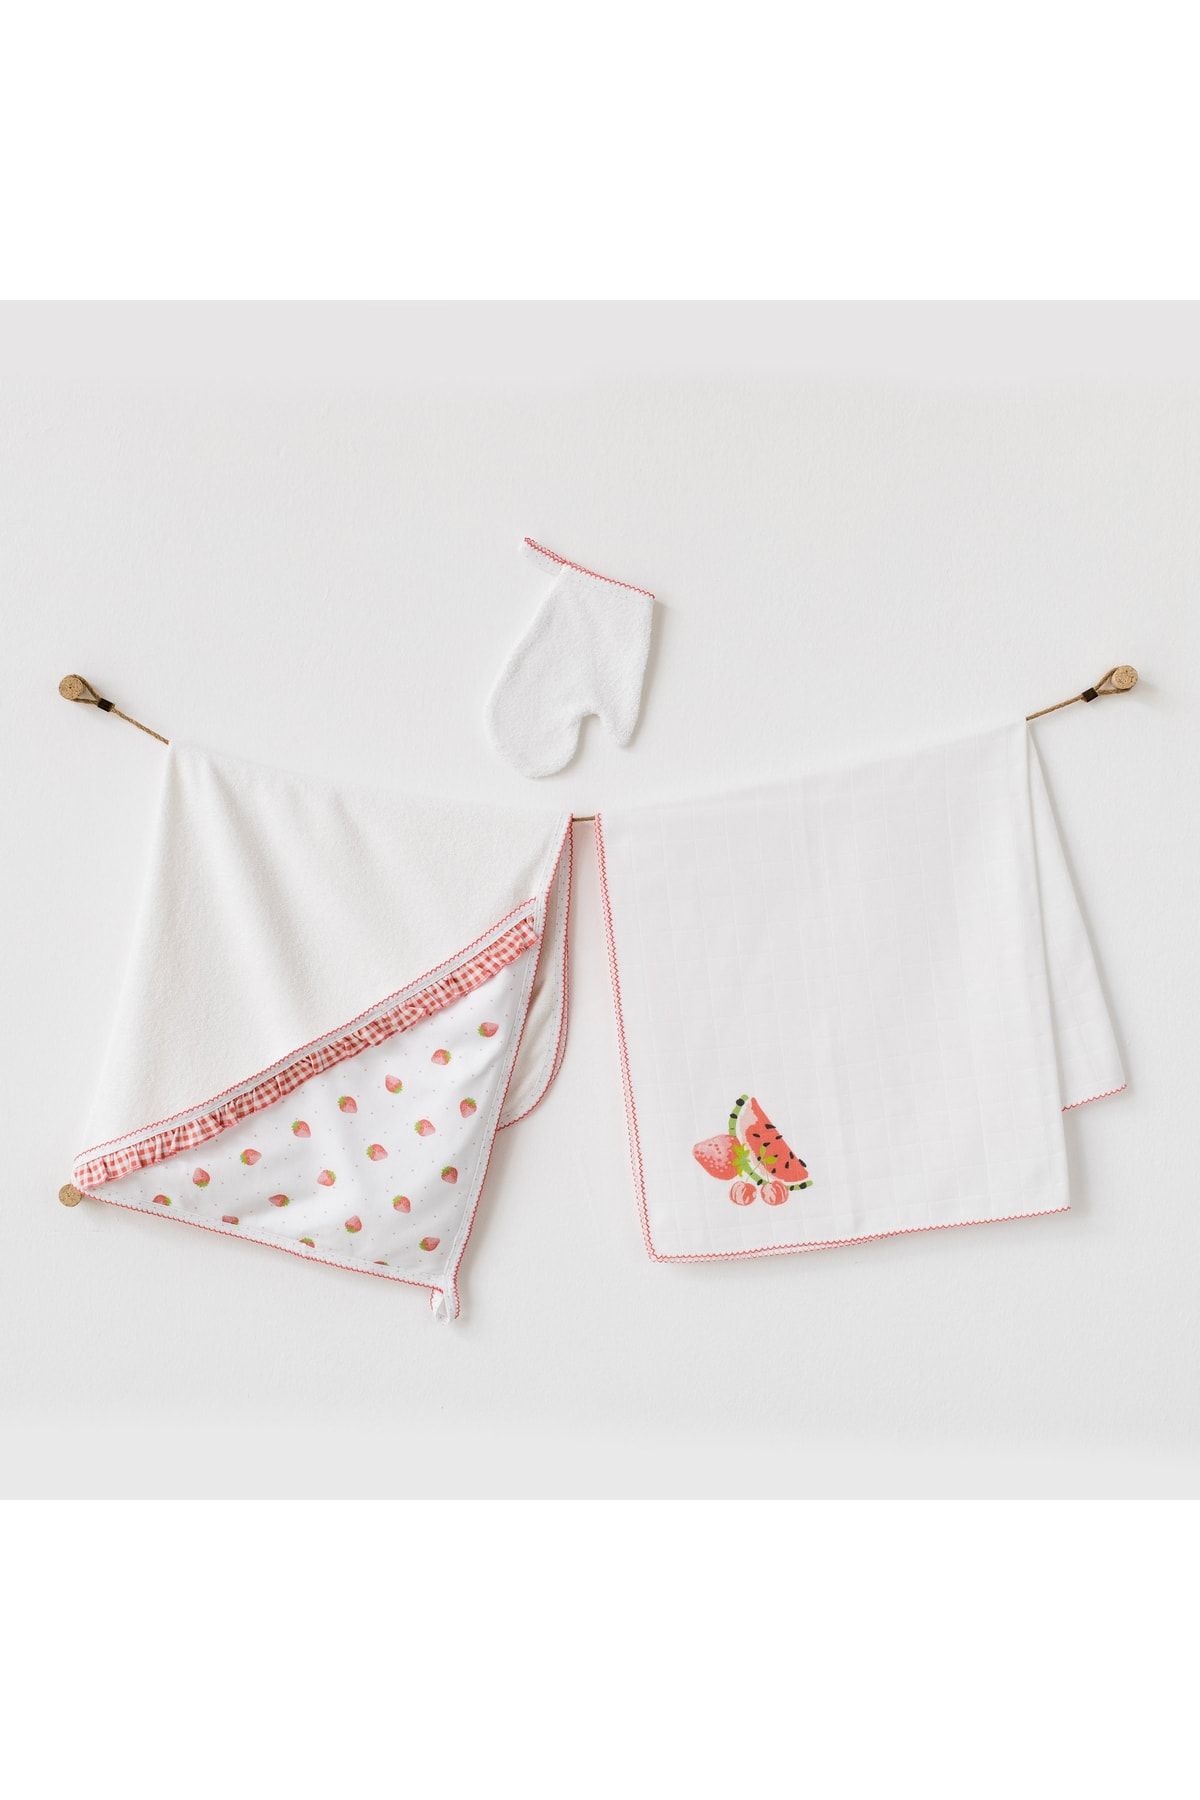 Andy Wawa Bebek Havlu Takım 3 Pcs Towel Muslın Set Strawberry Pıcnıc Tıme